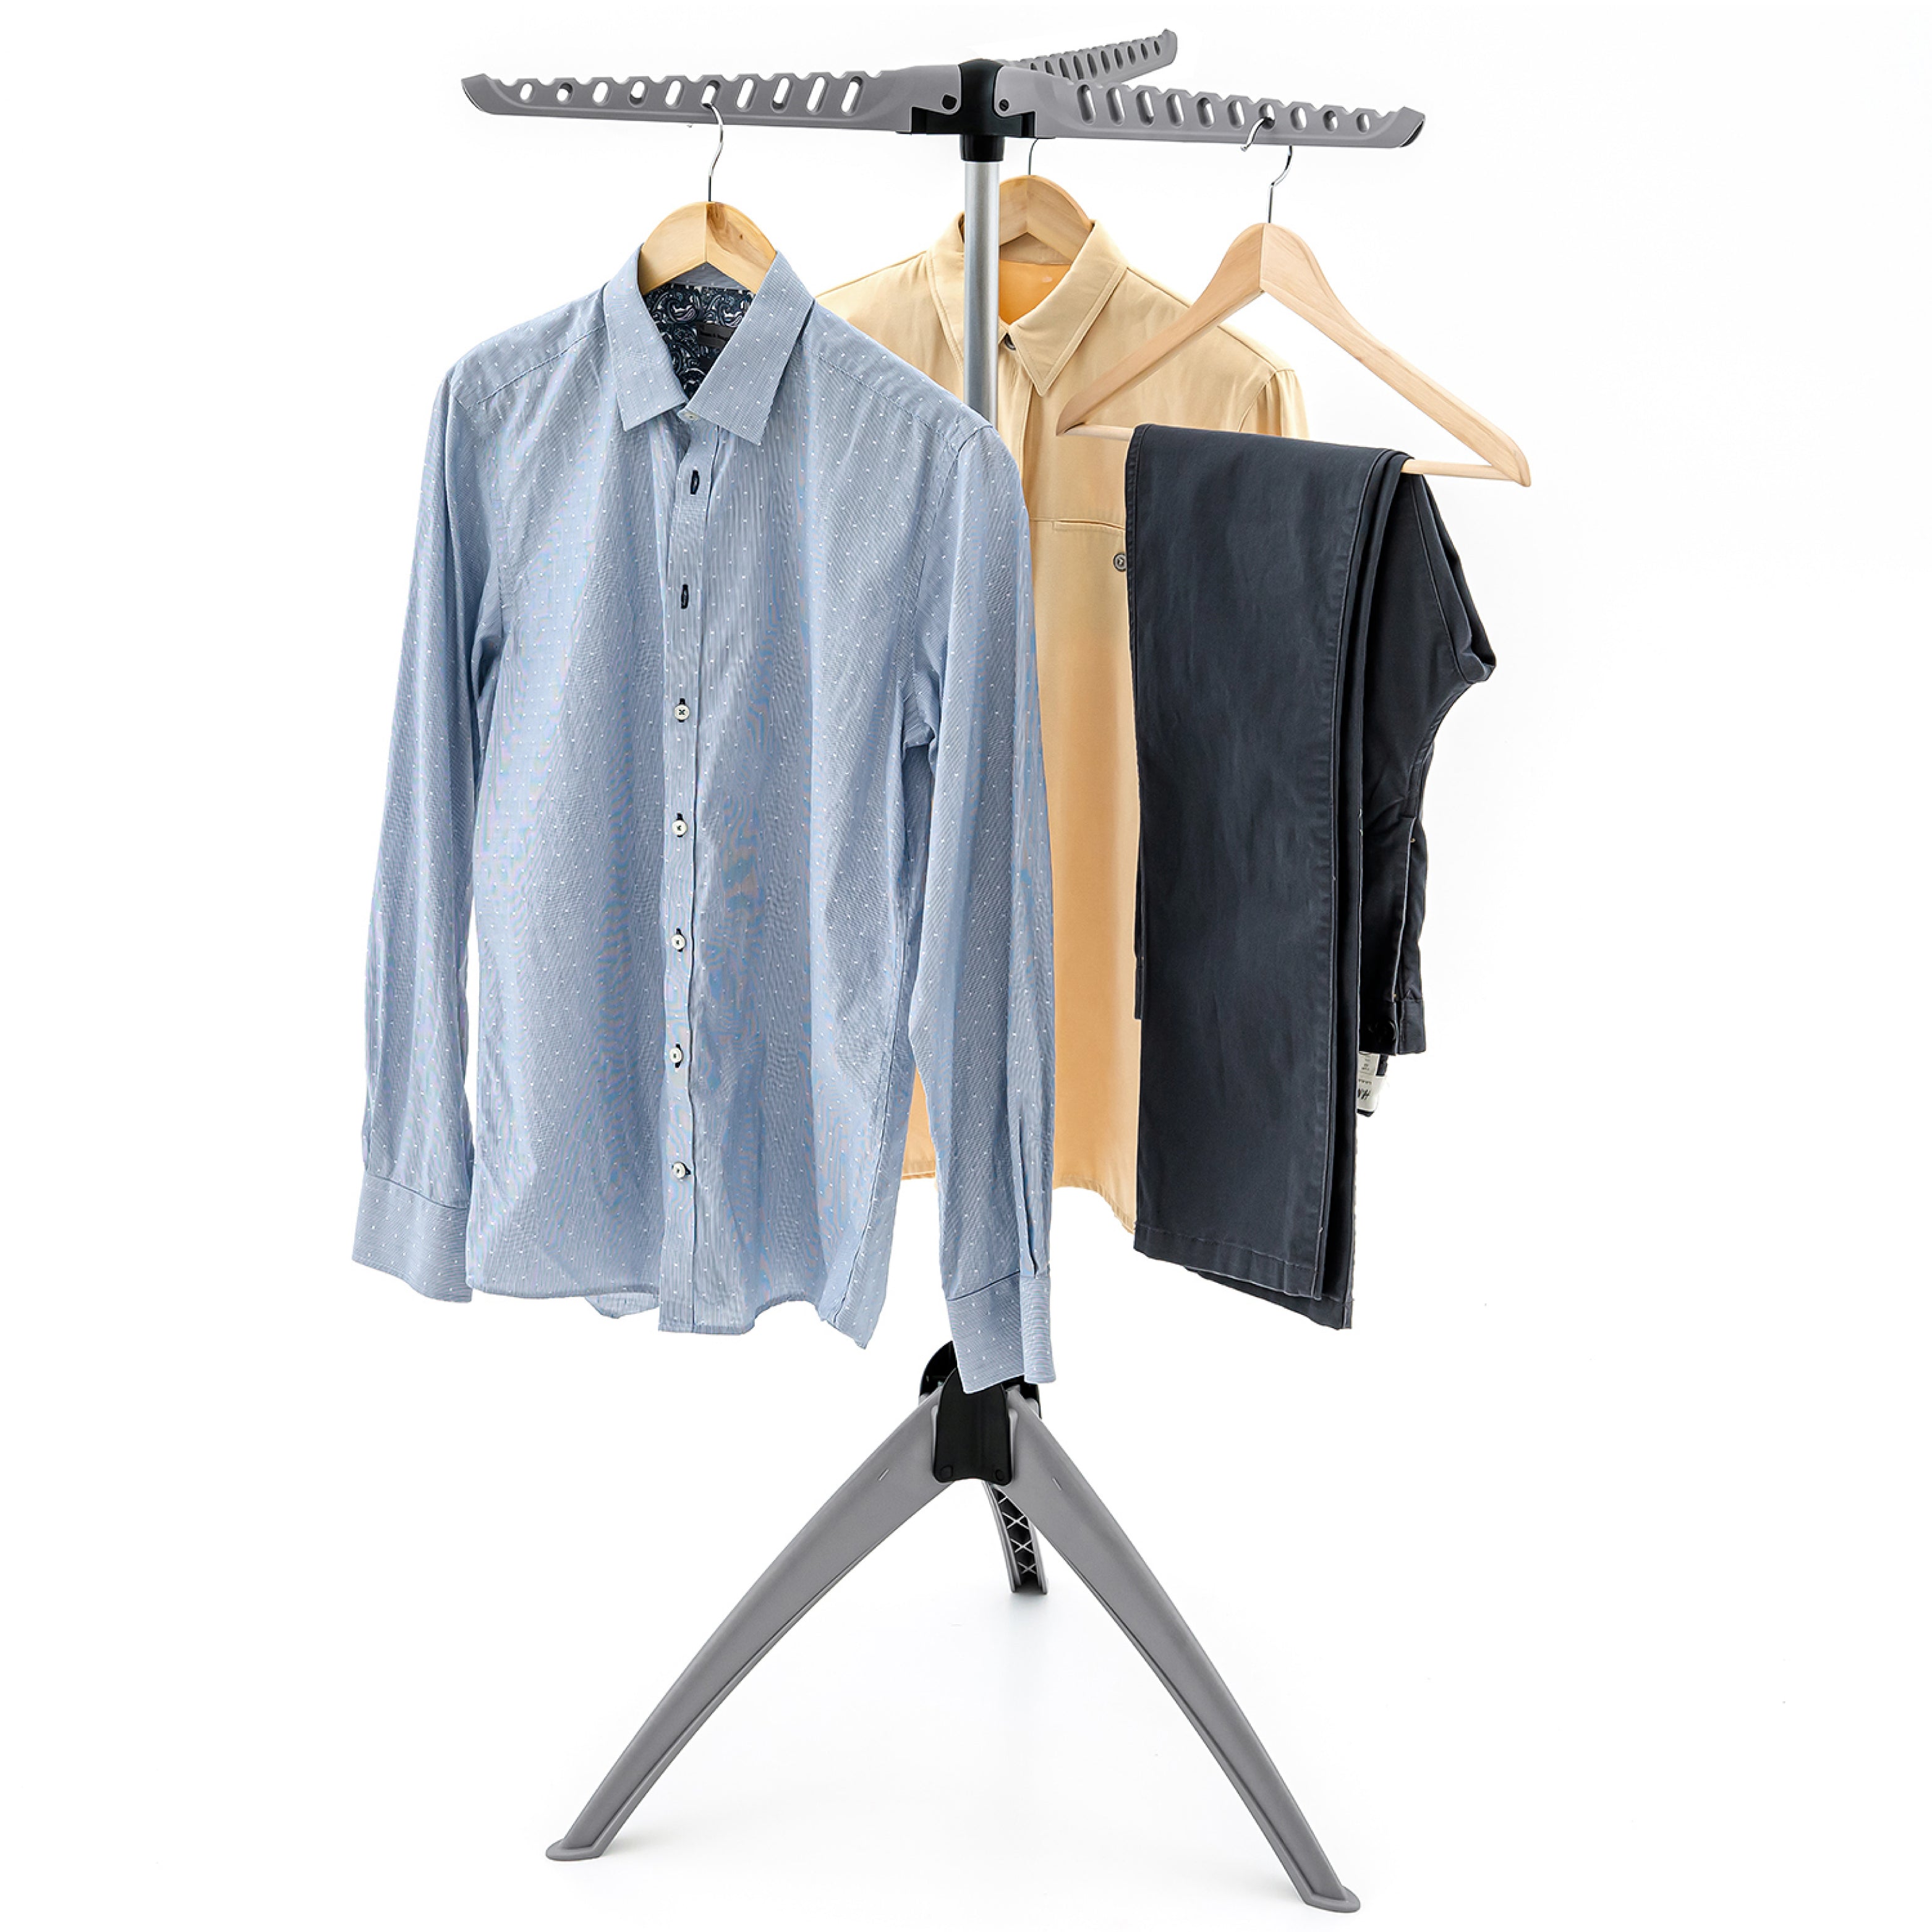 Luxury Suit Hangers | The Savile Row Choice